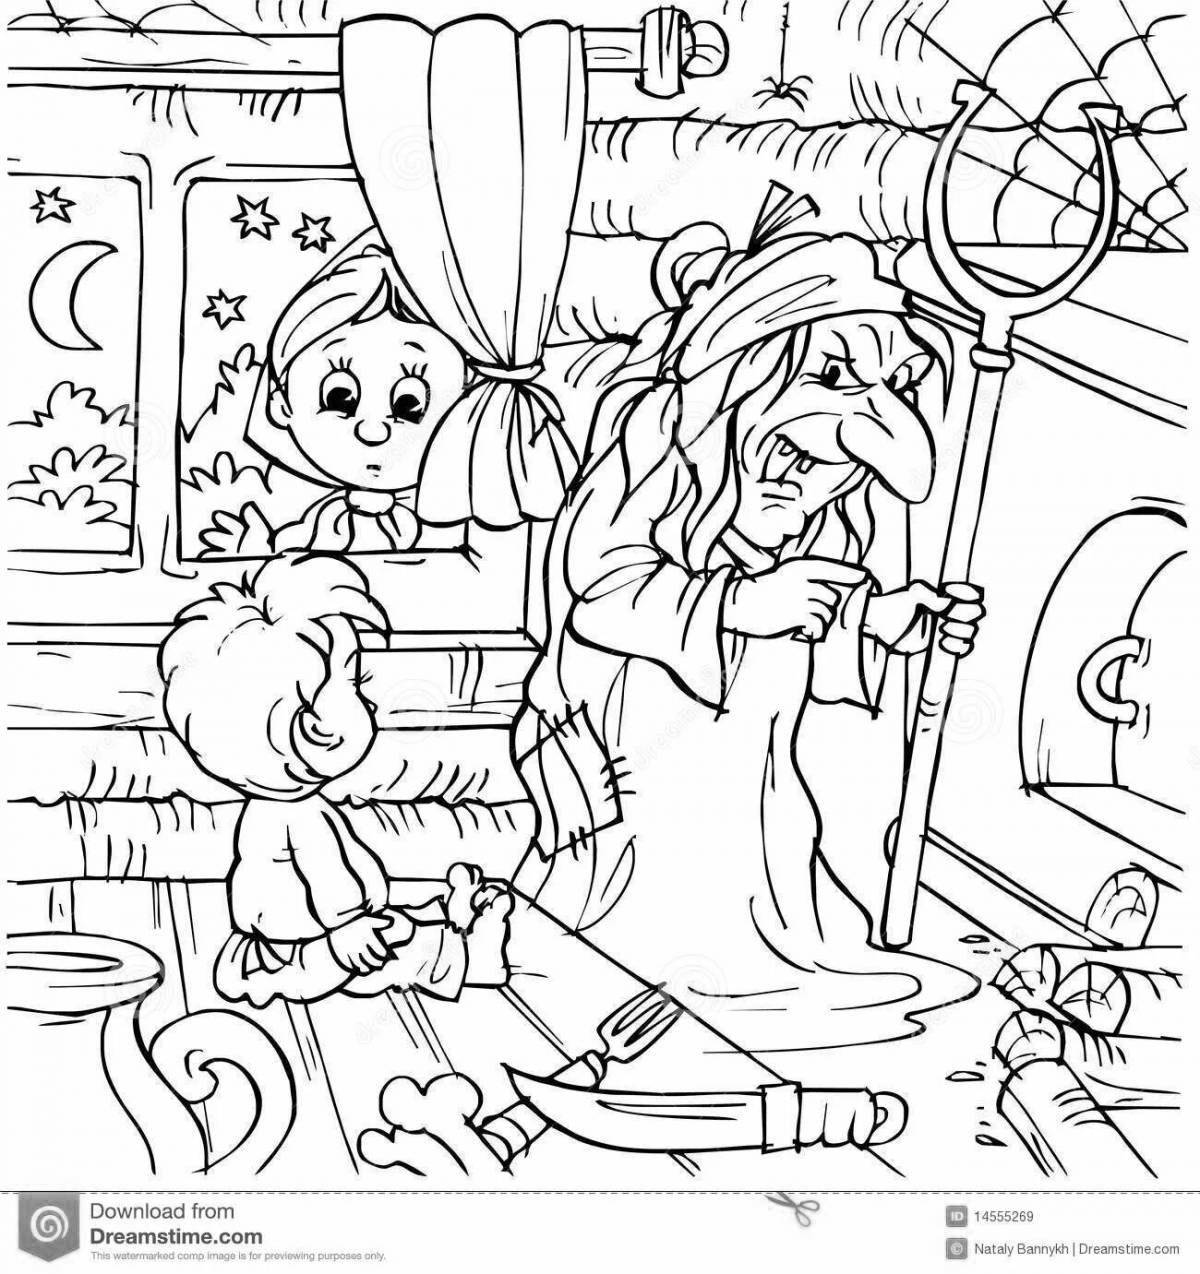 Hansel and Gretel's wonderful coloring book magic agency